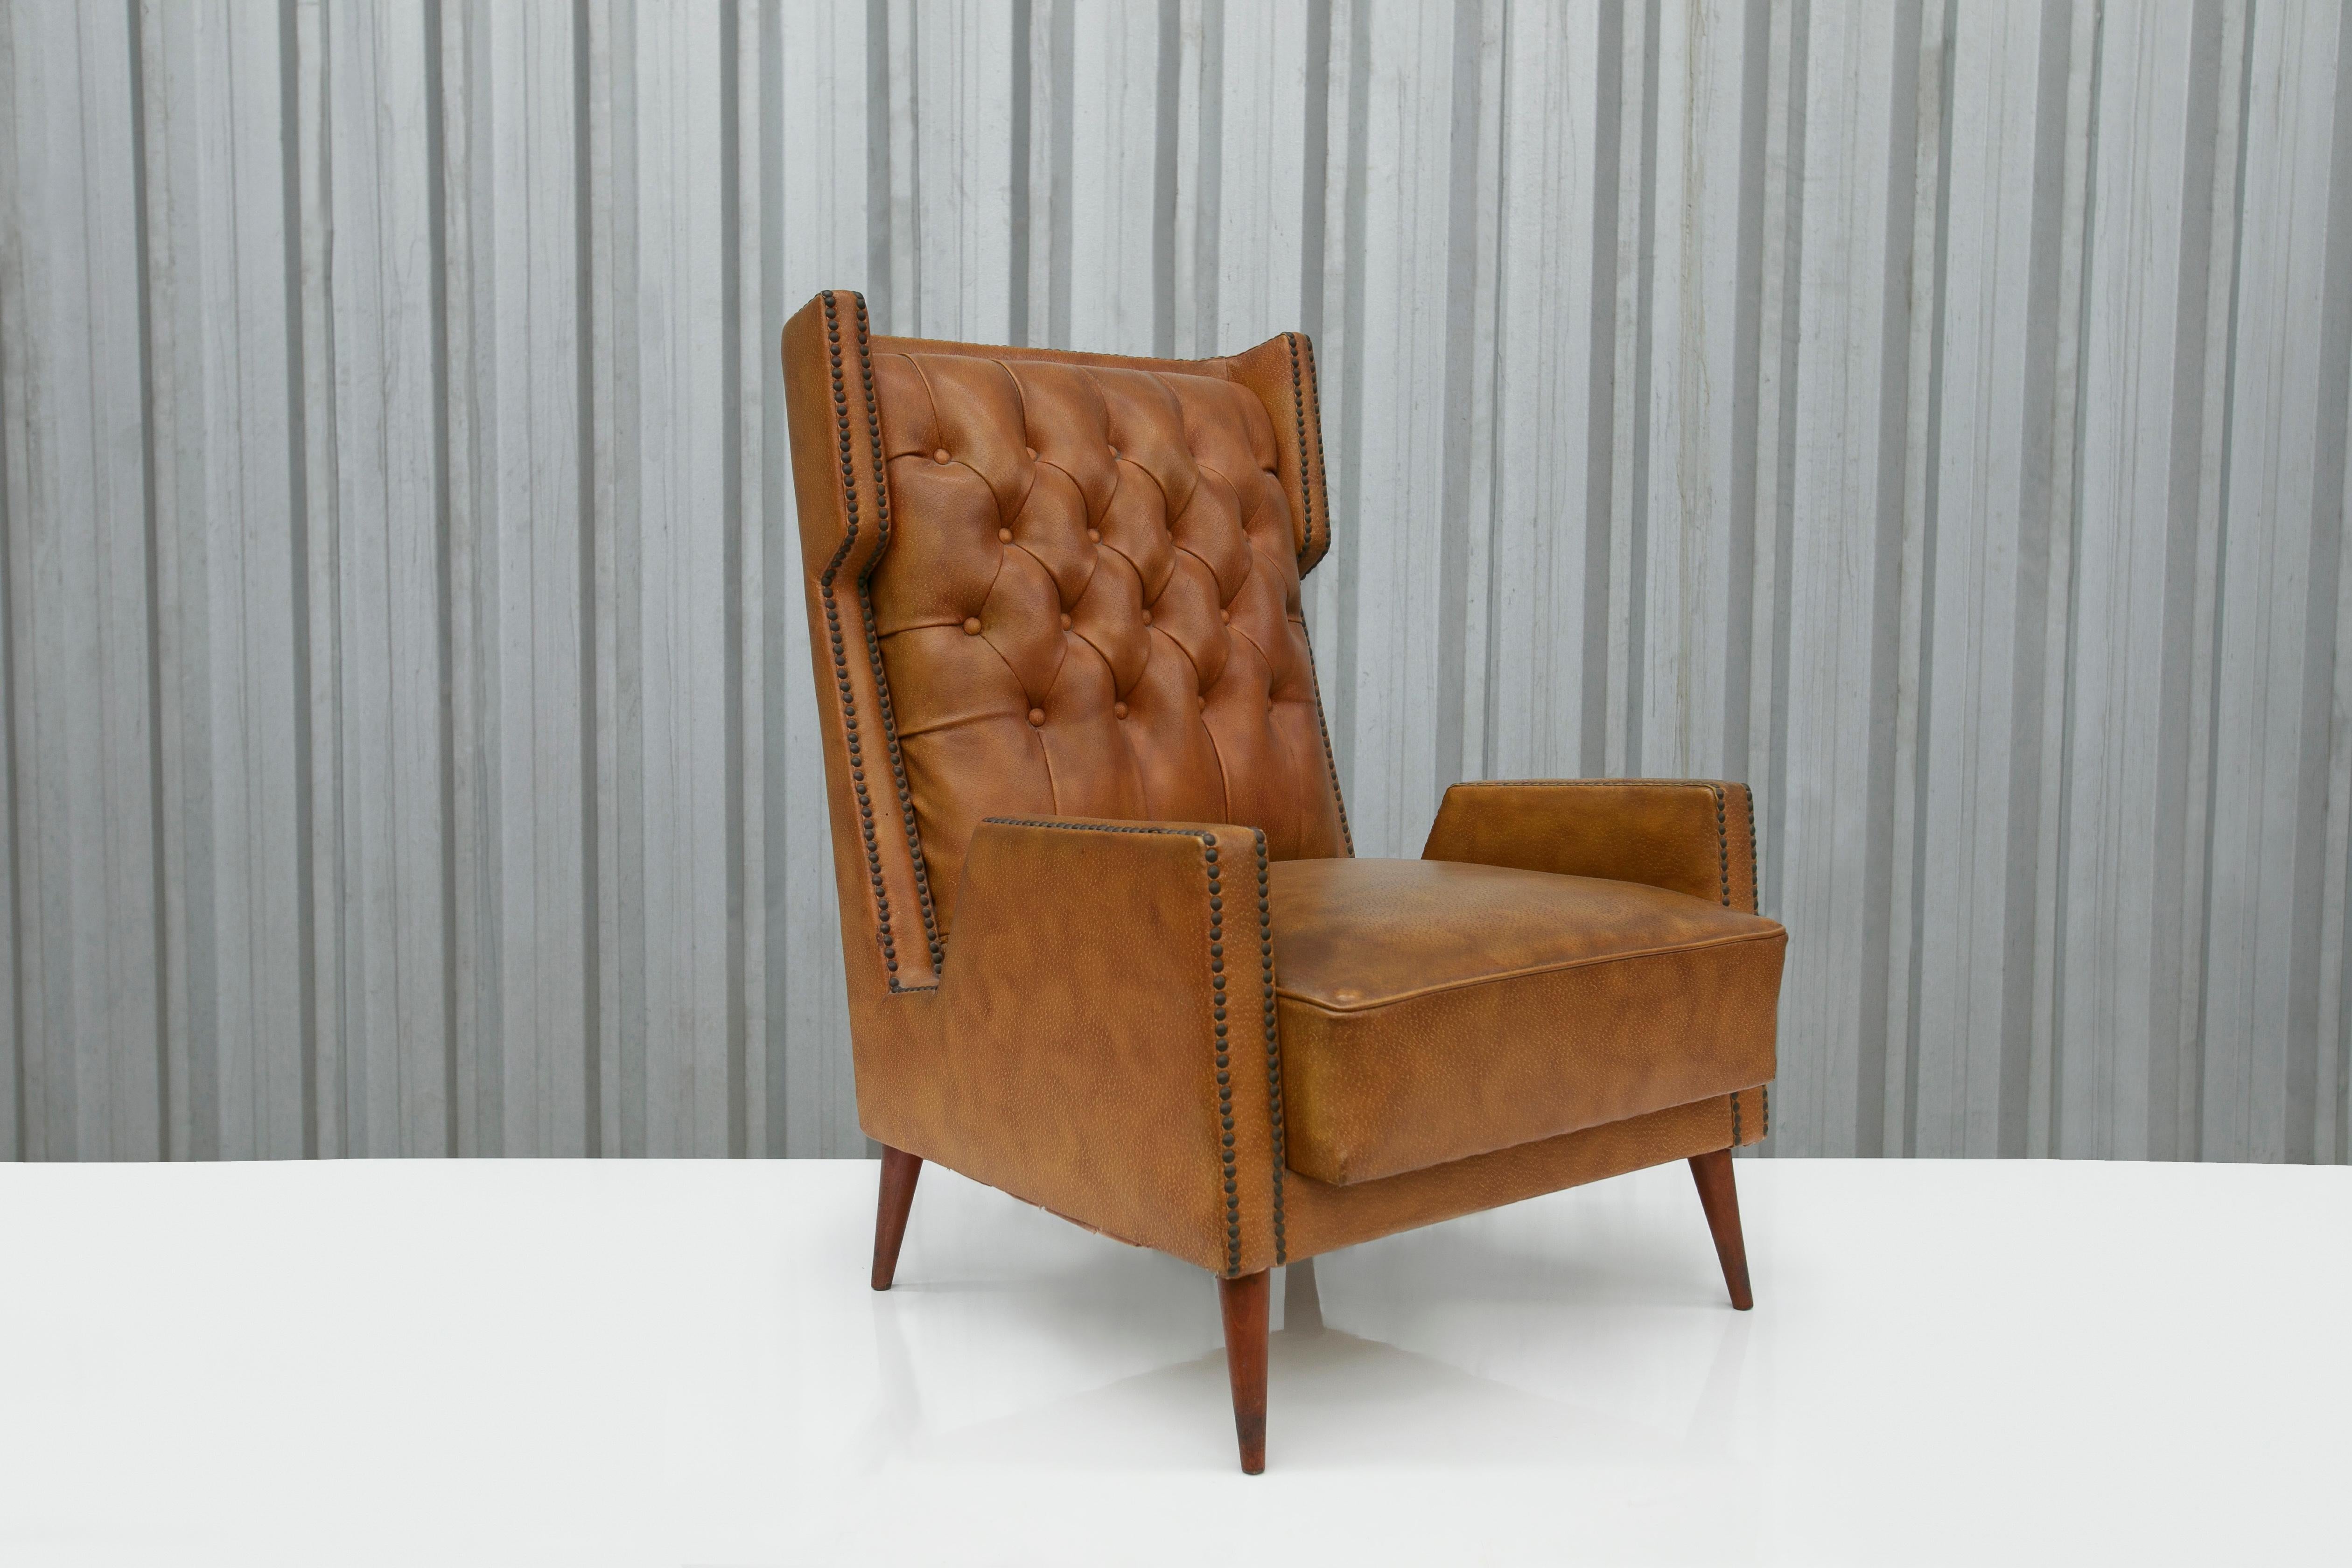 Brasilianischer moderner Sessel aus Hartholz, braunes Leder, G. Scapinelli, 1950er Jahre (Moderne der Mitte des Jahrhunderts) im Angebot